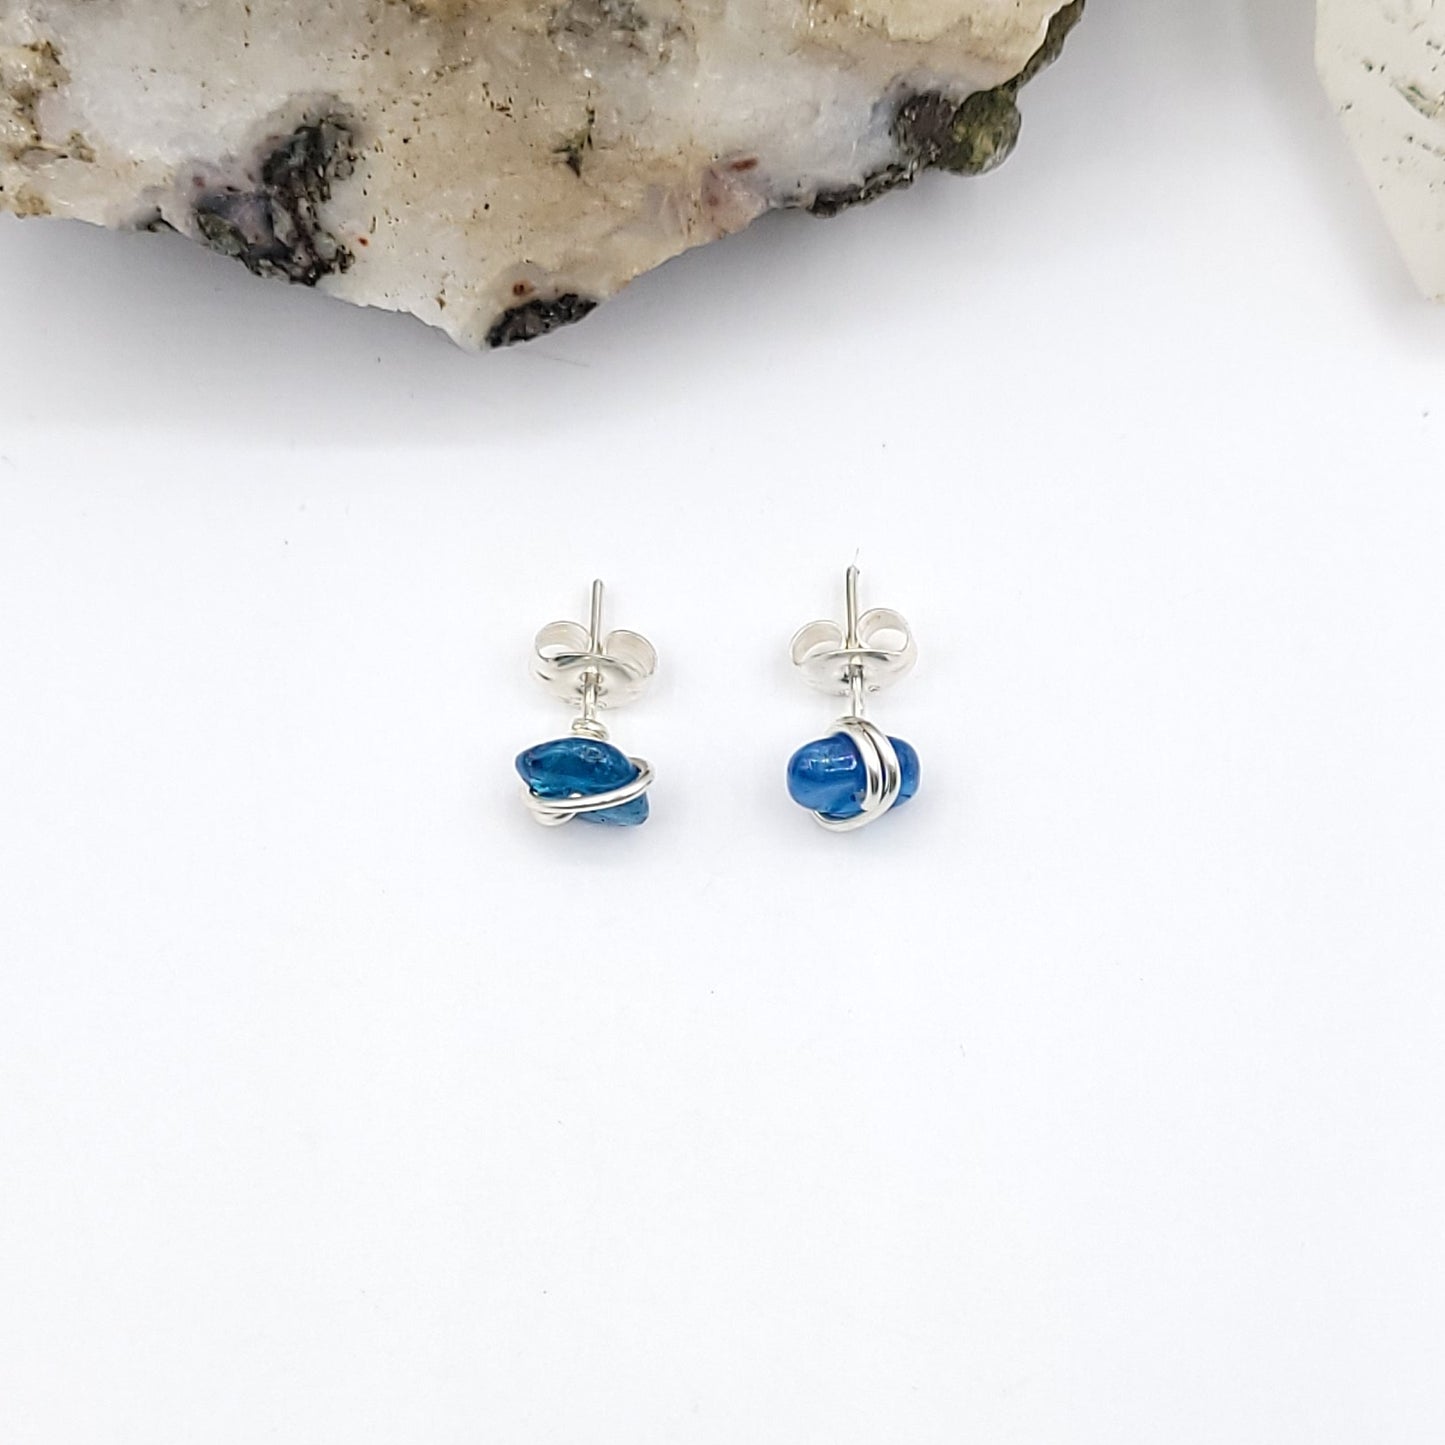 Blue Apatite Crystal Stud Earrings in Sterling Silver Wire